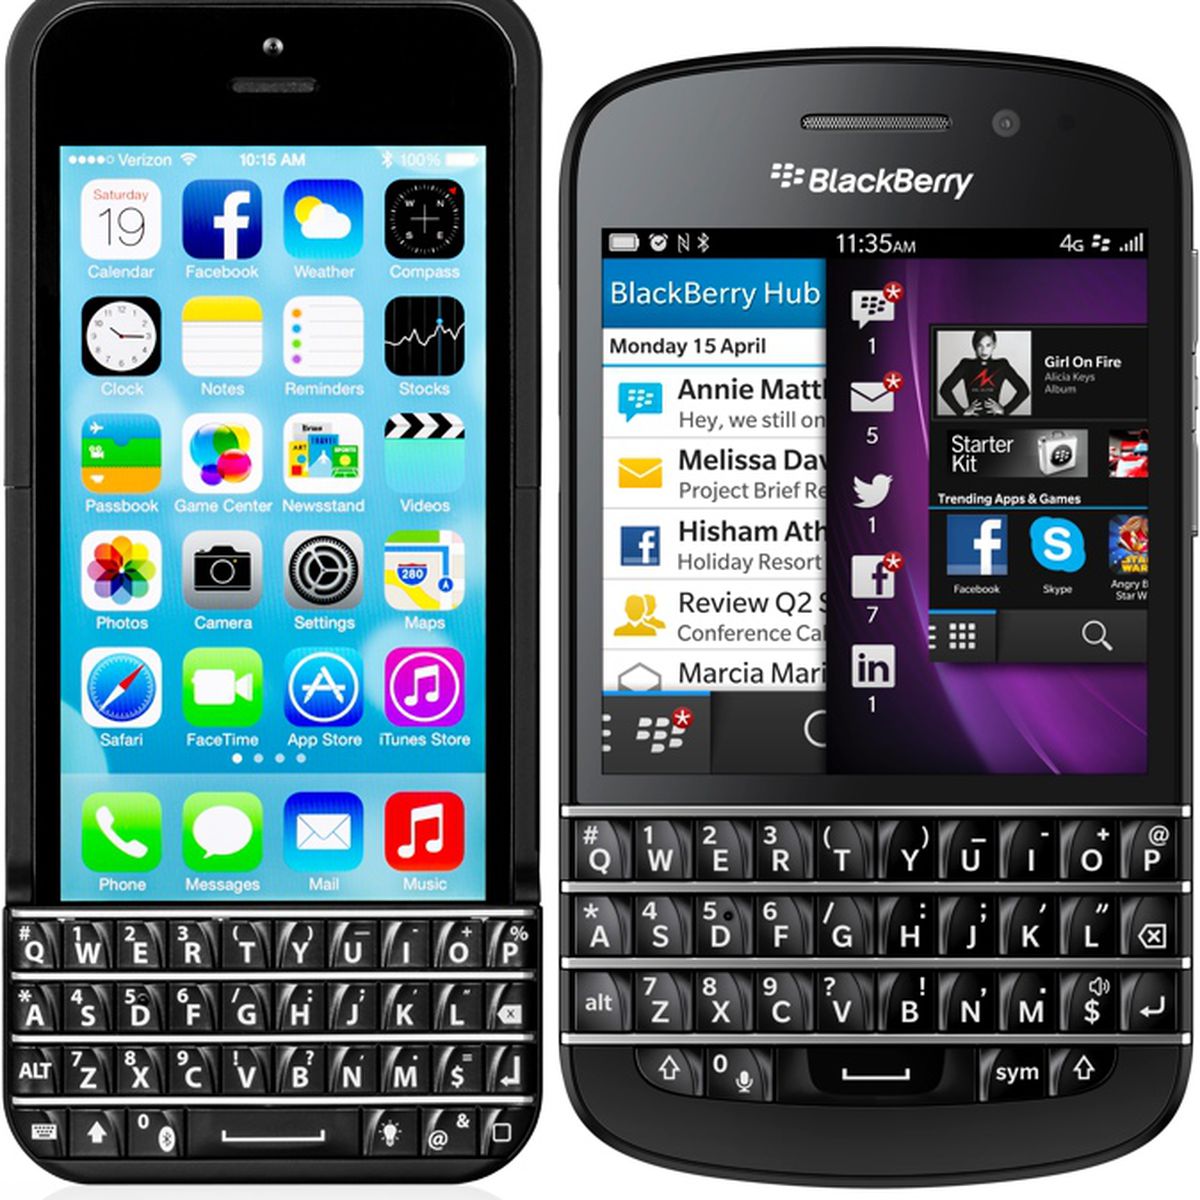 Iphone Keyboard Maker Typo Ordered To Pay Blackberry 860 000 Macrumors